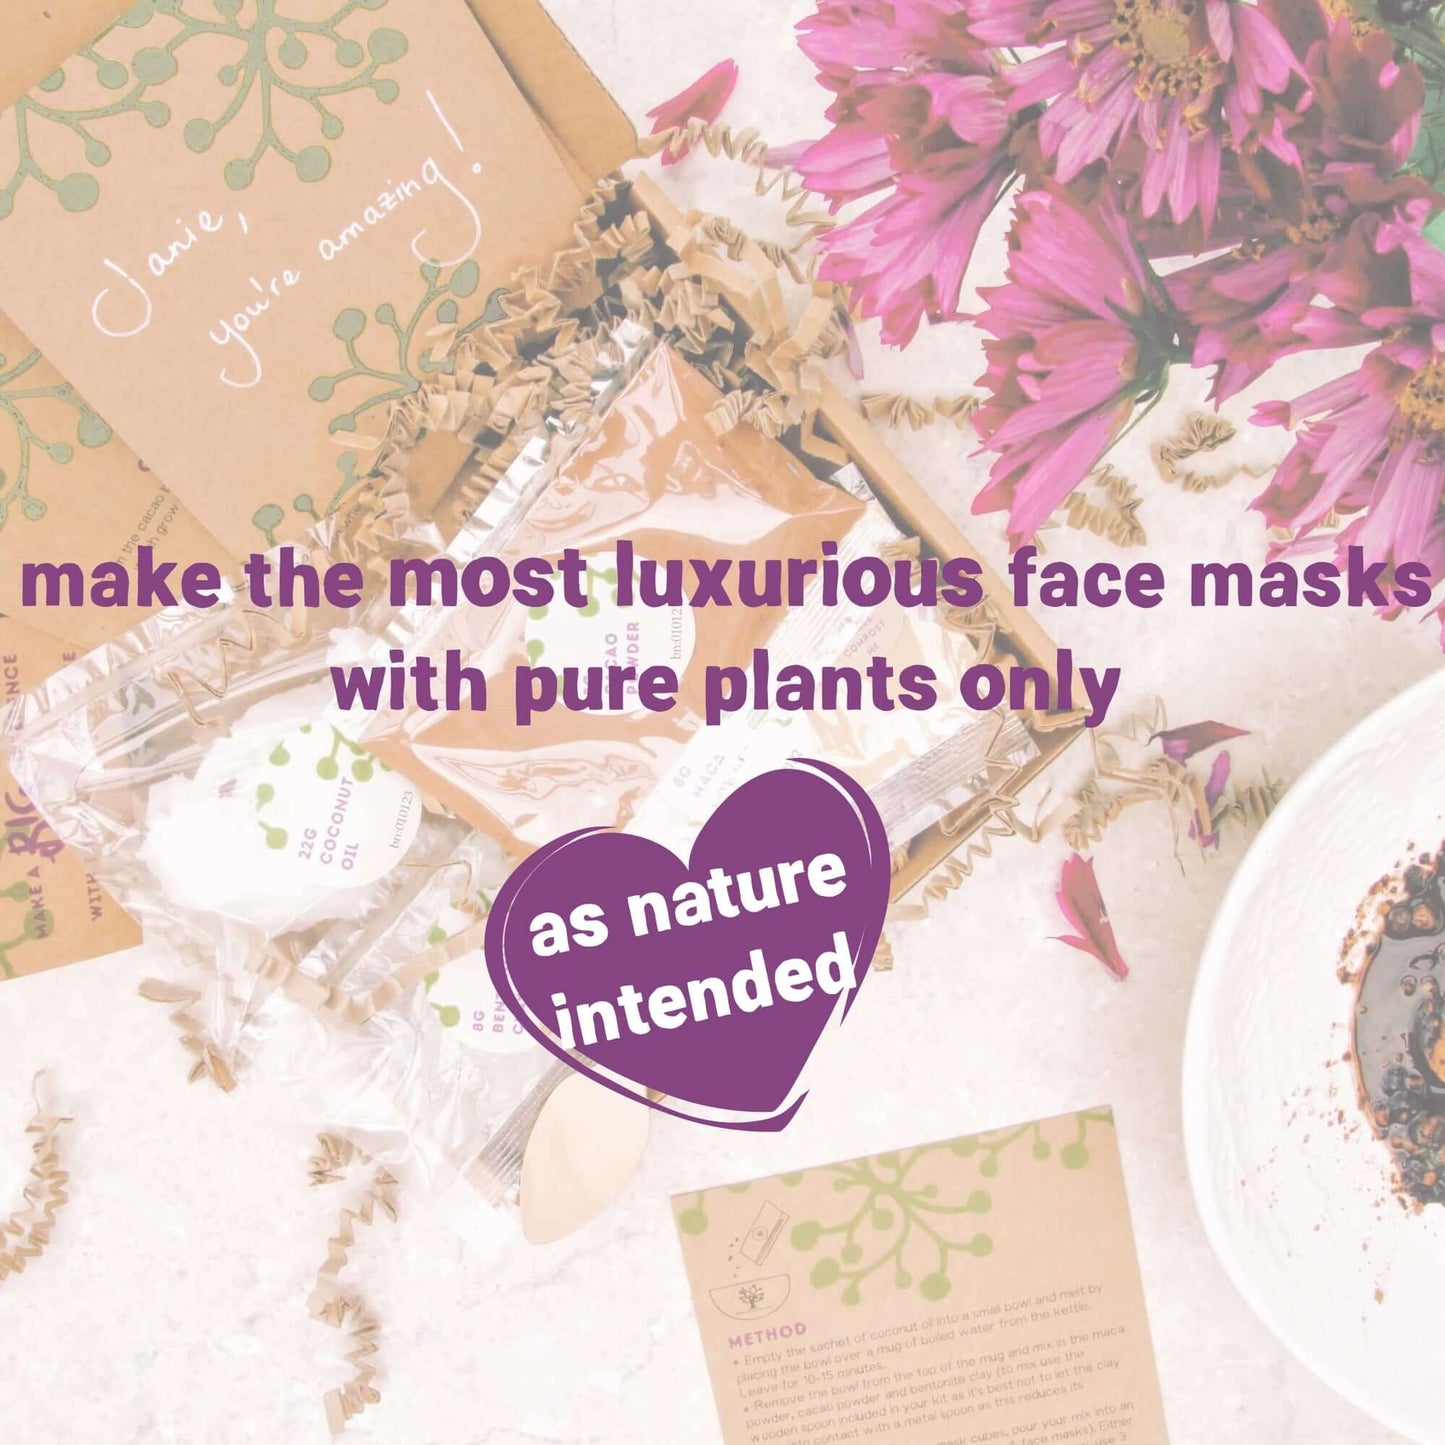 eco-friendly vegan face mask kit inside mum gift box